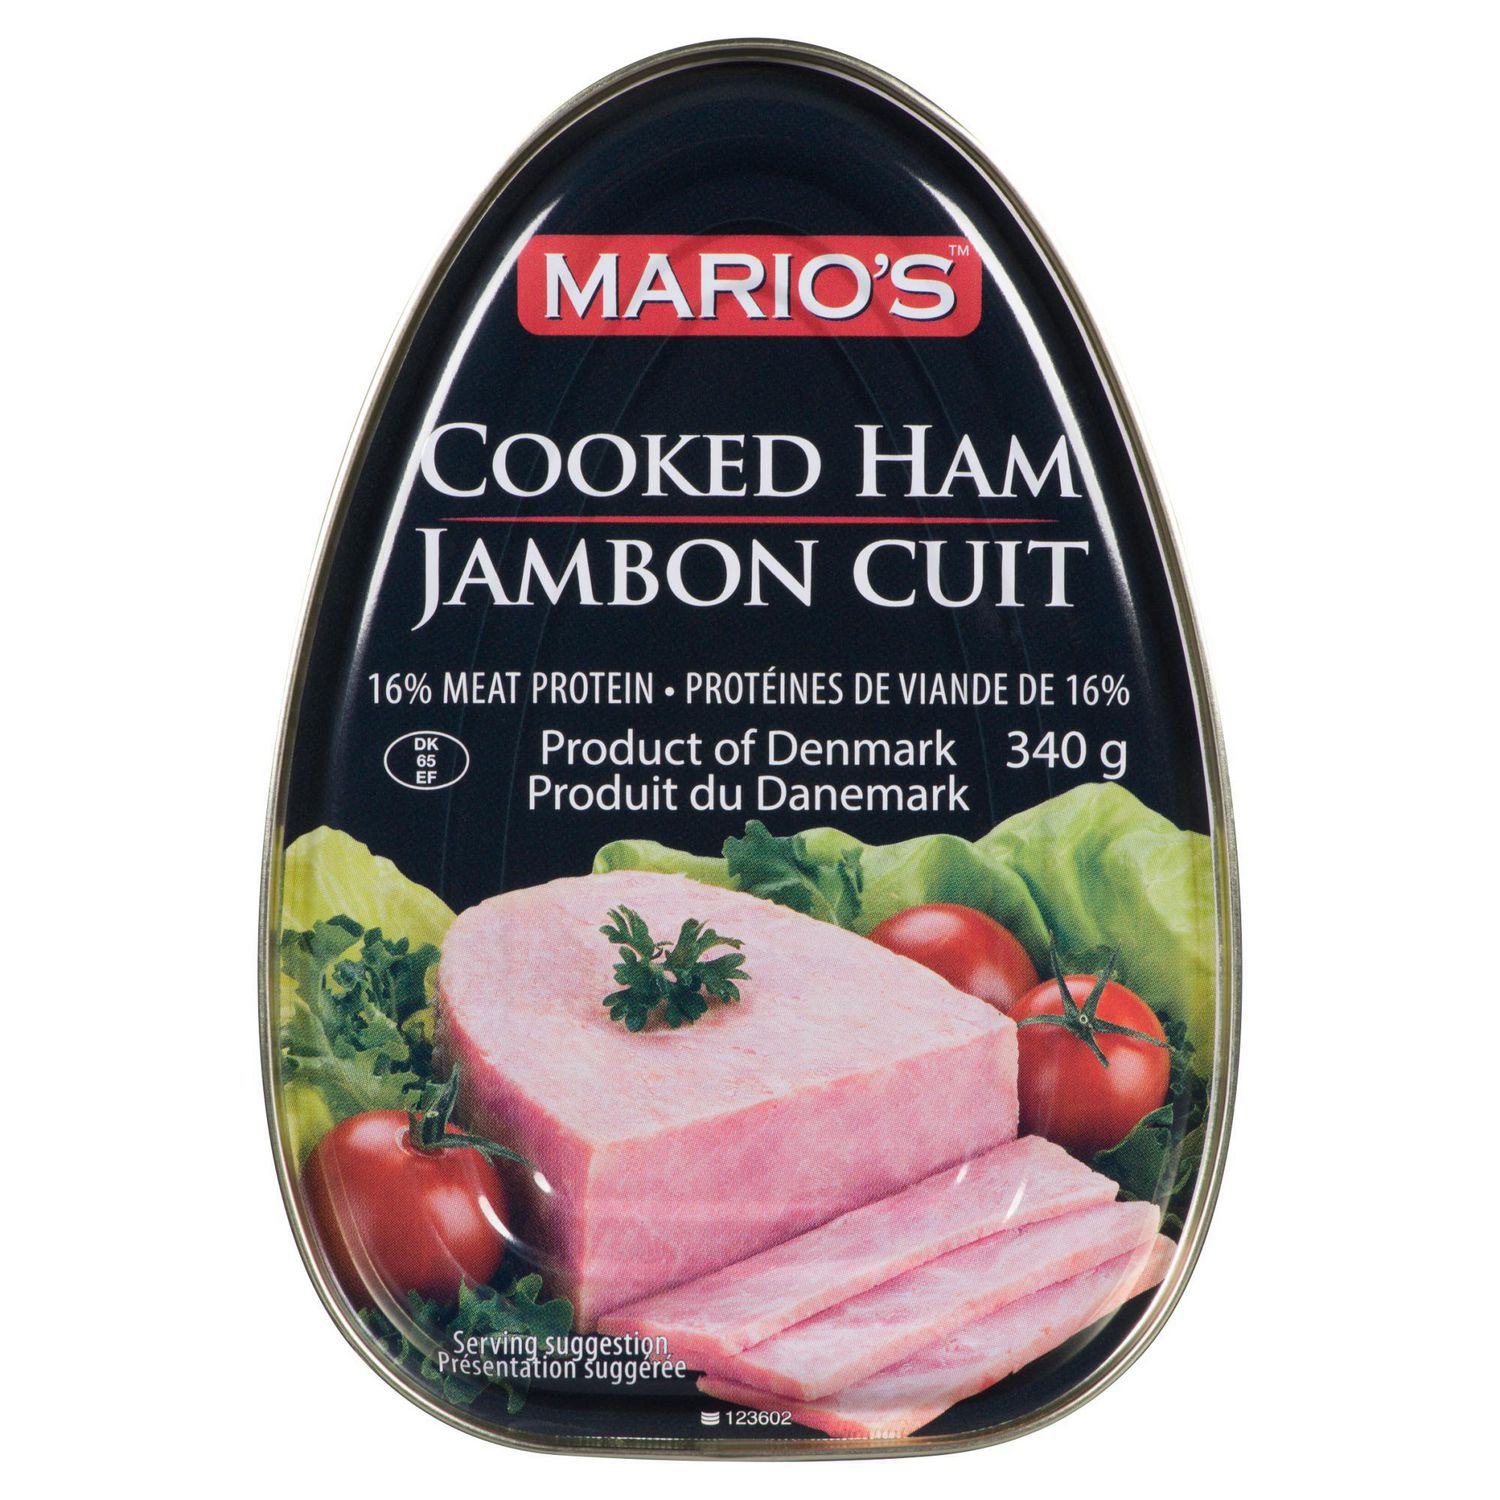 Marios ham from Denmark